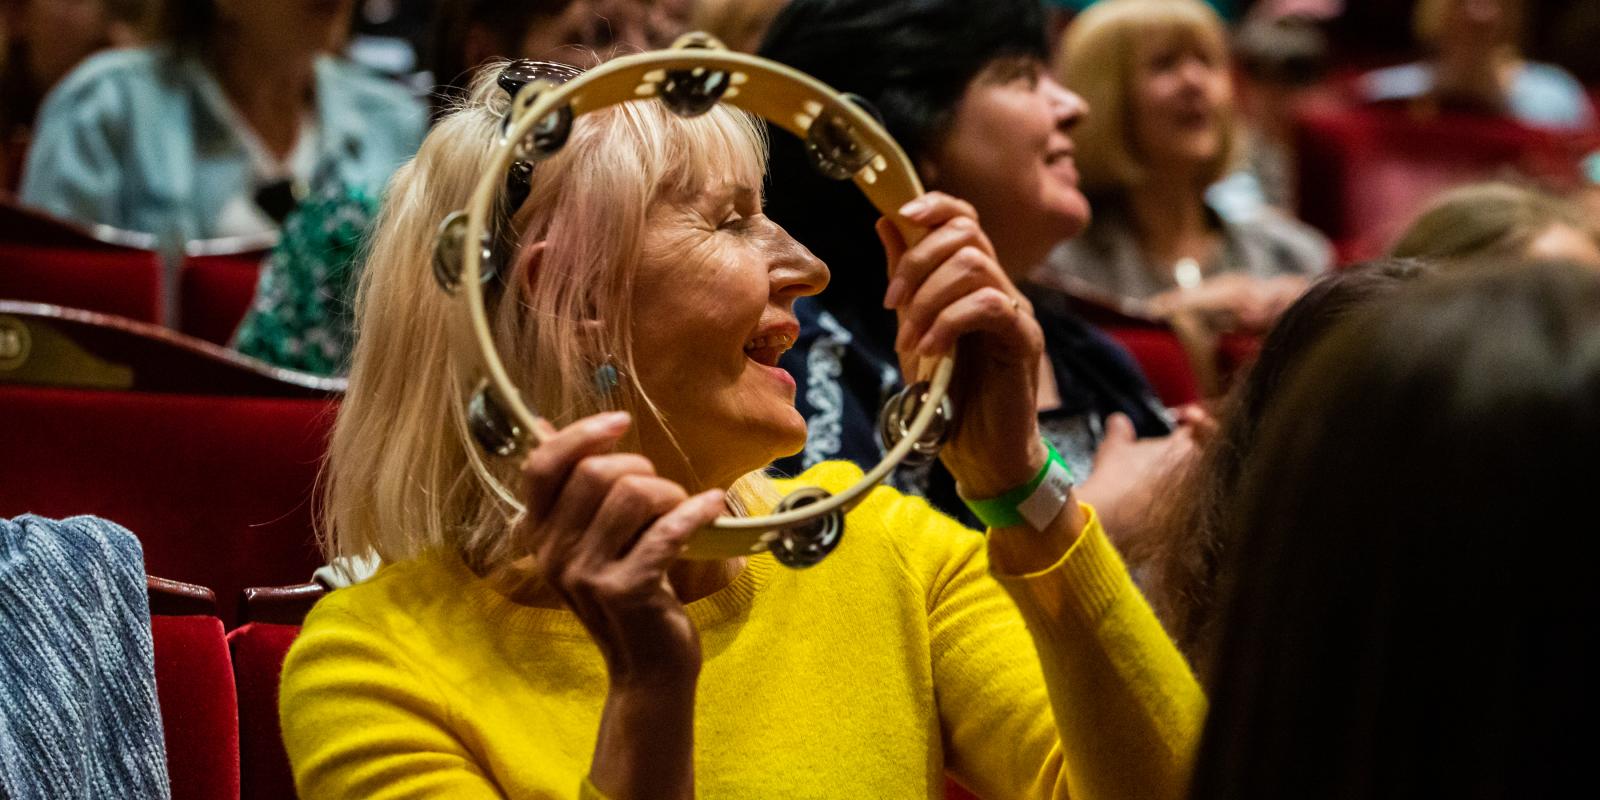 Lady with tambourine in workshop in London Coliseum auditorium